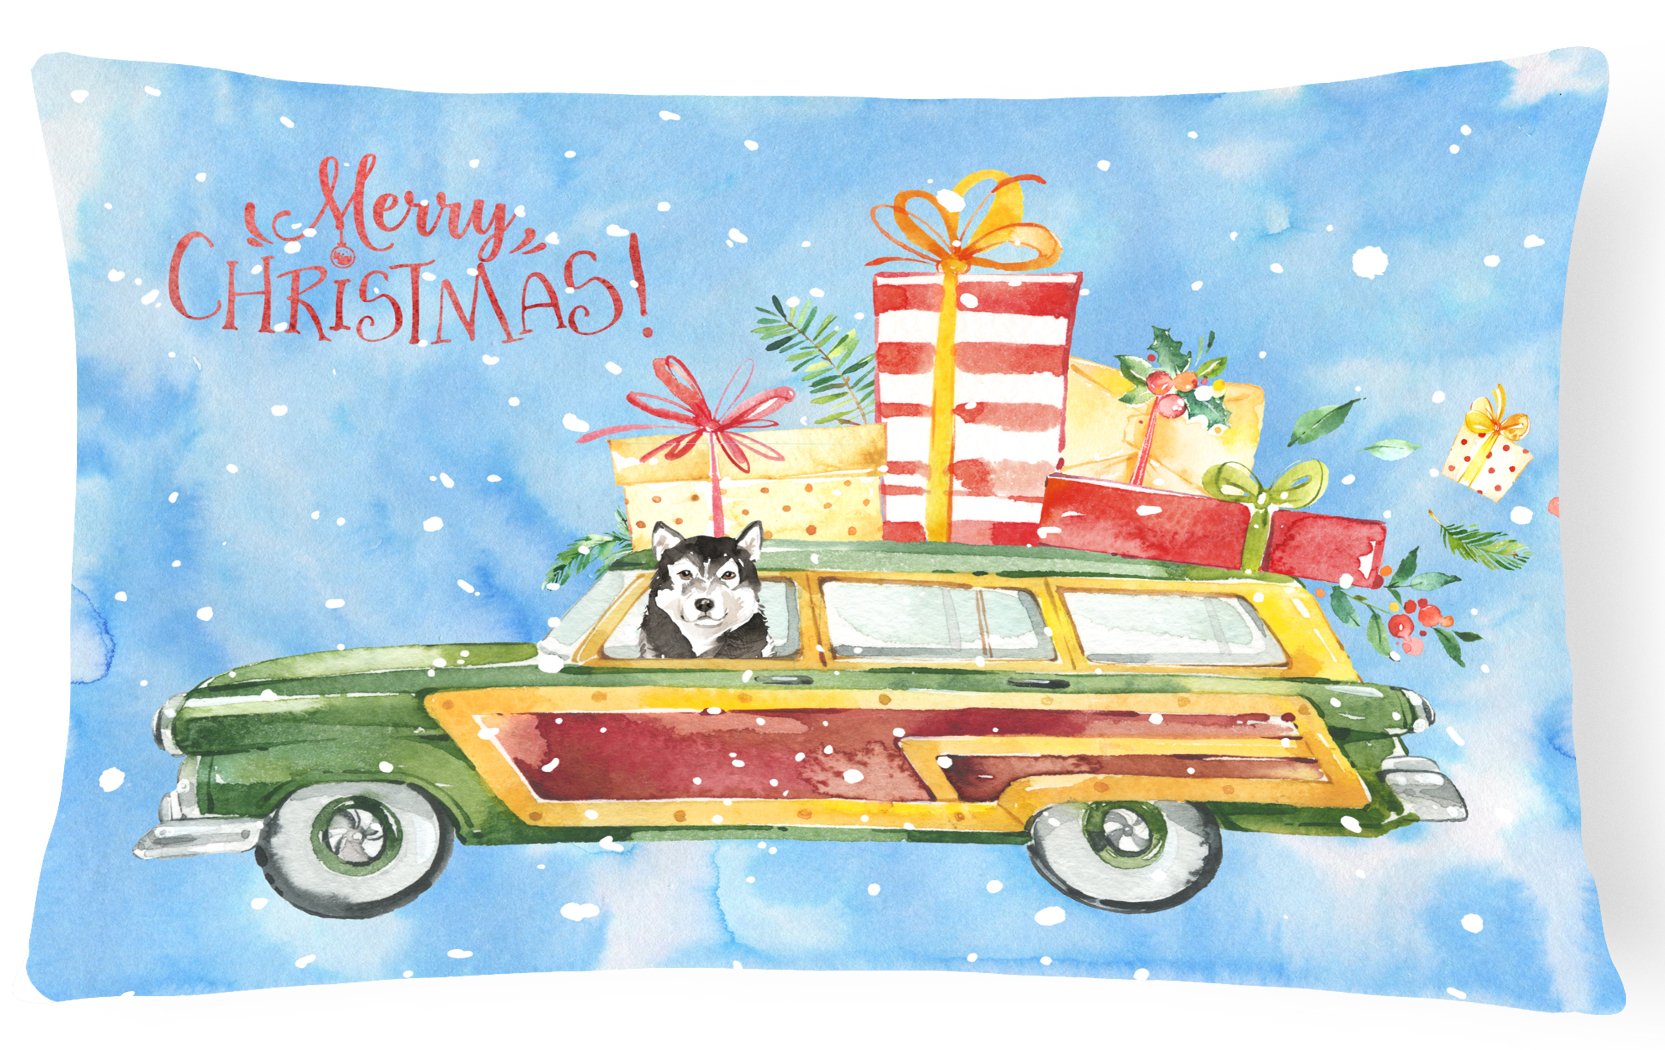 Merry Christmas Alaskan Malamute Canvas Fabric Decorative Pillow CK2413PW1216 by Caroline's Treasures